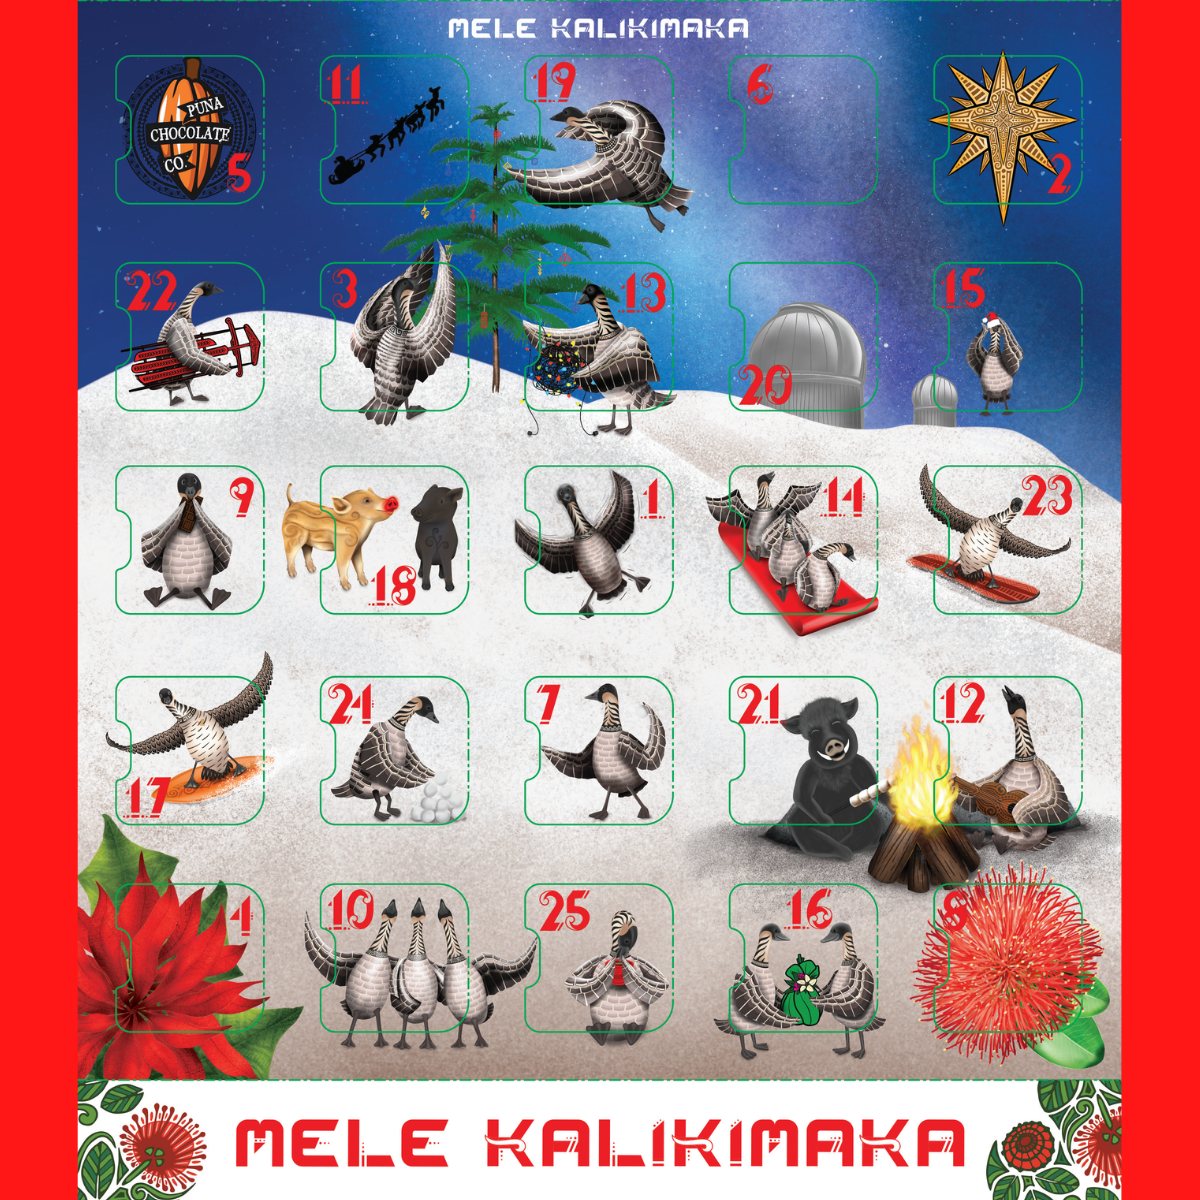 Mele Kalikimaka Chocolate Advent Calendar